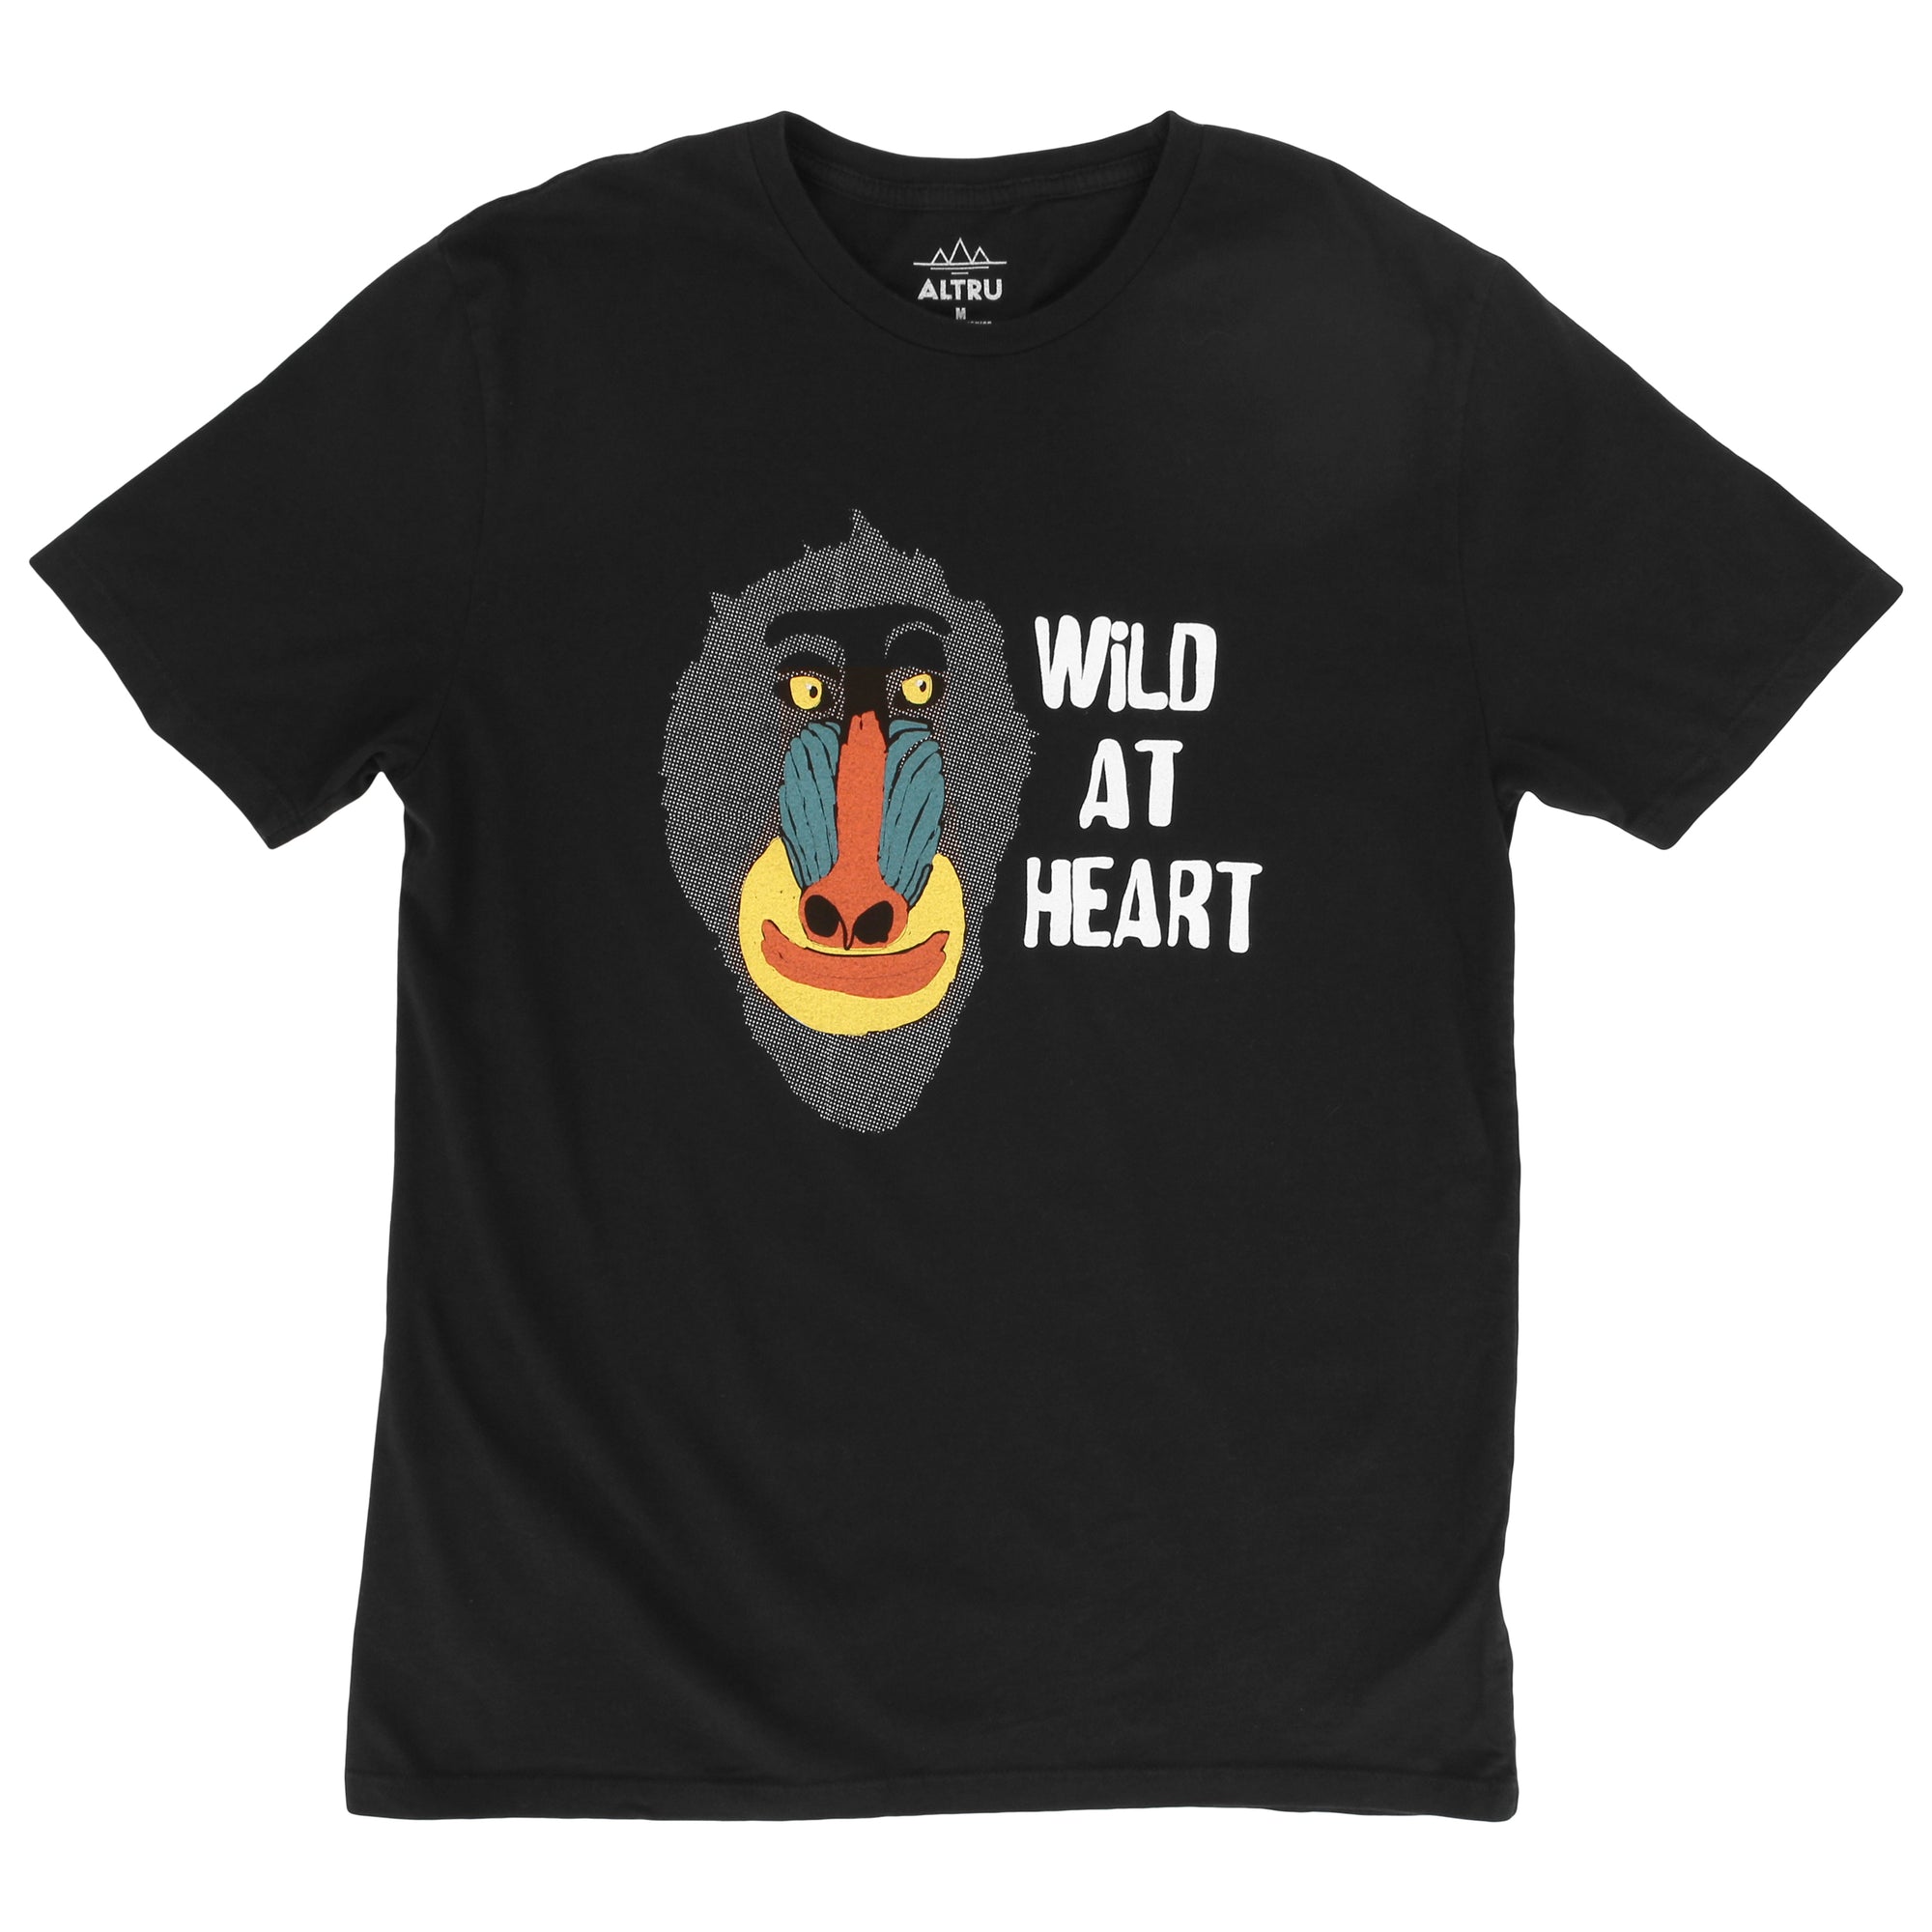 Wild at Heart Beast by Altru Apparel